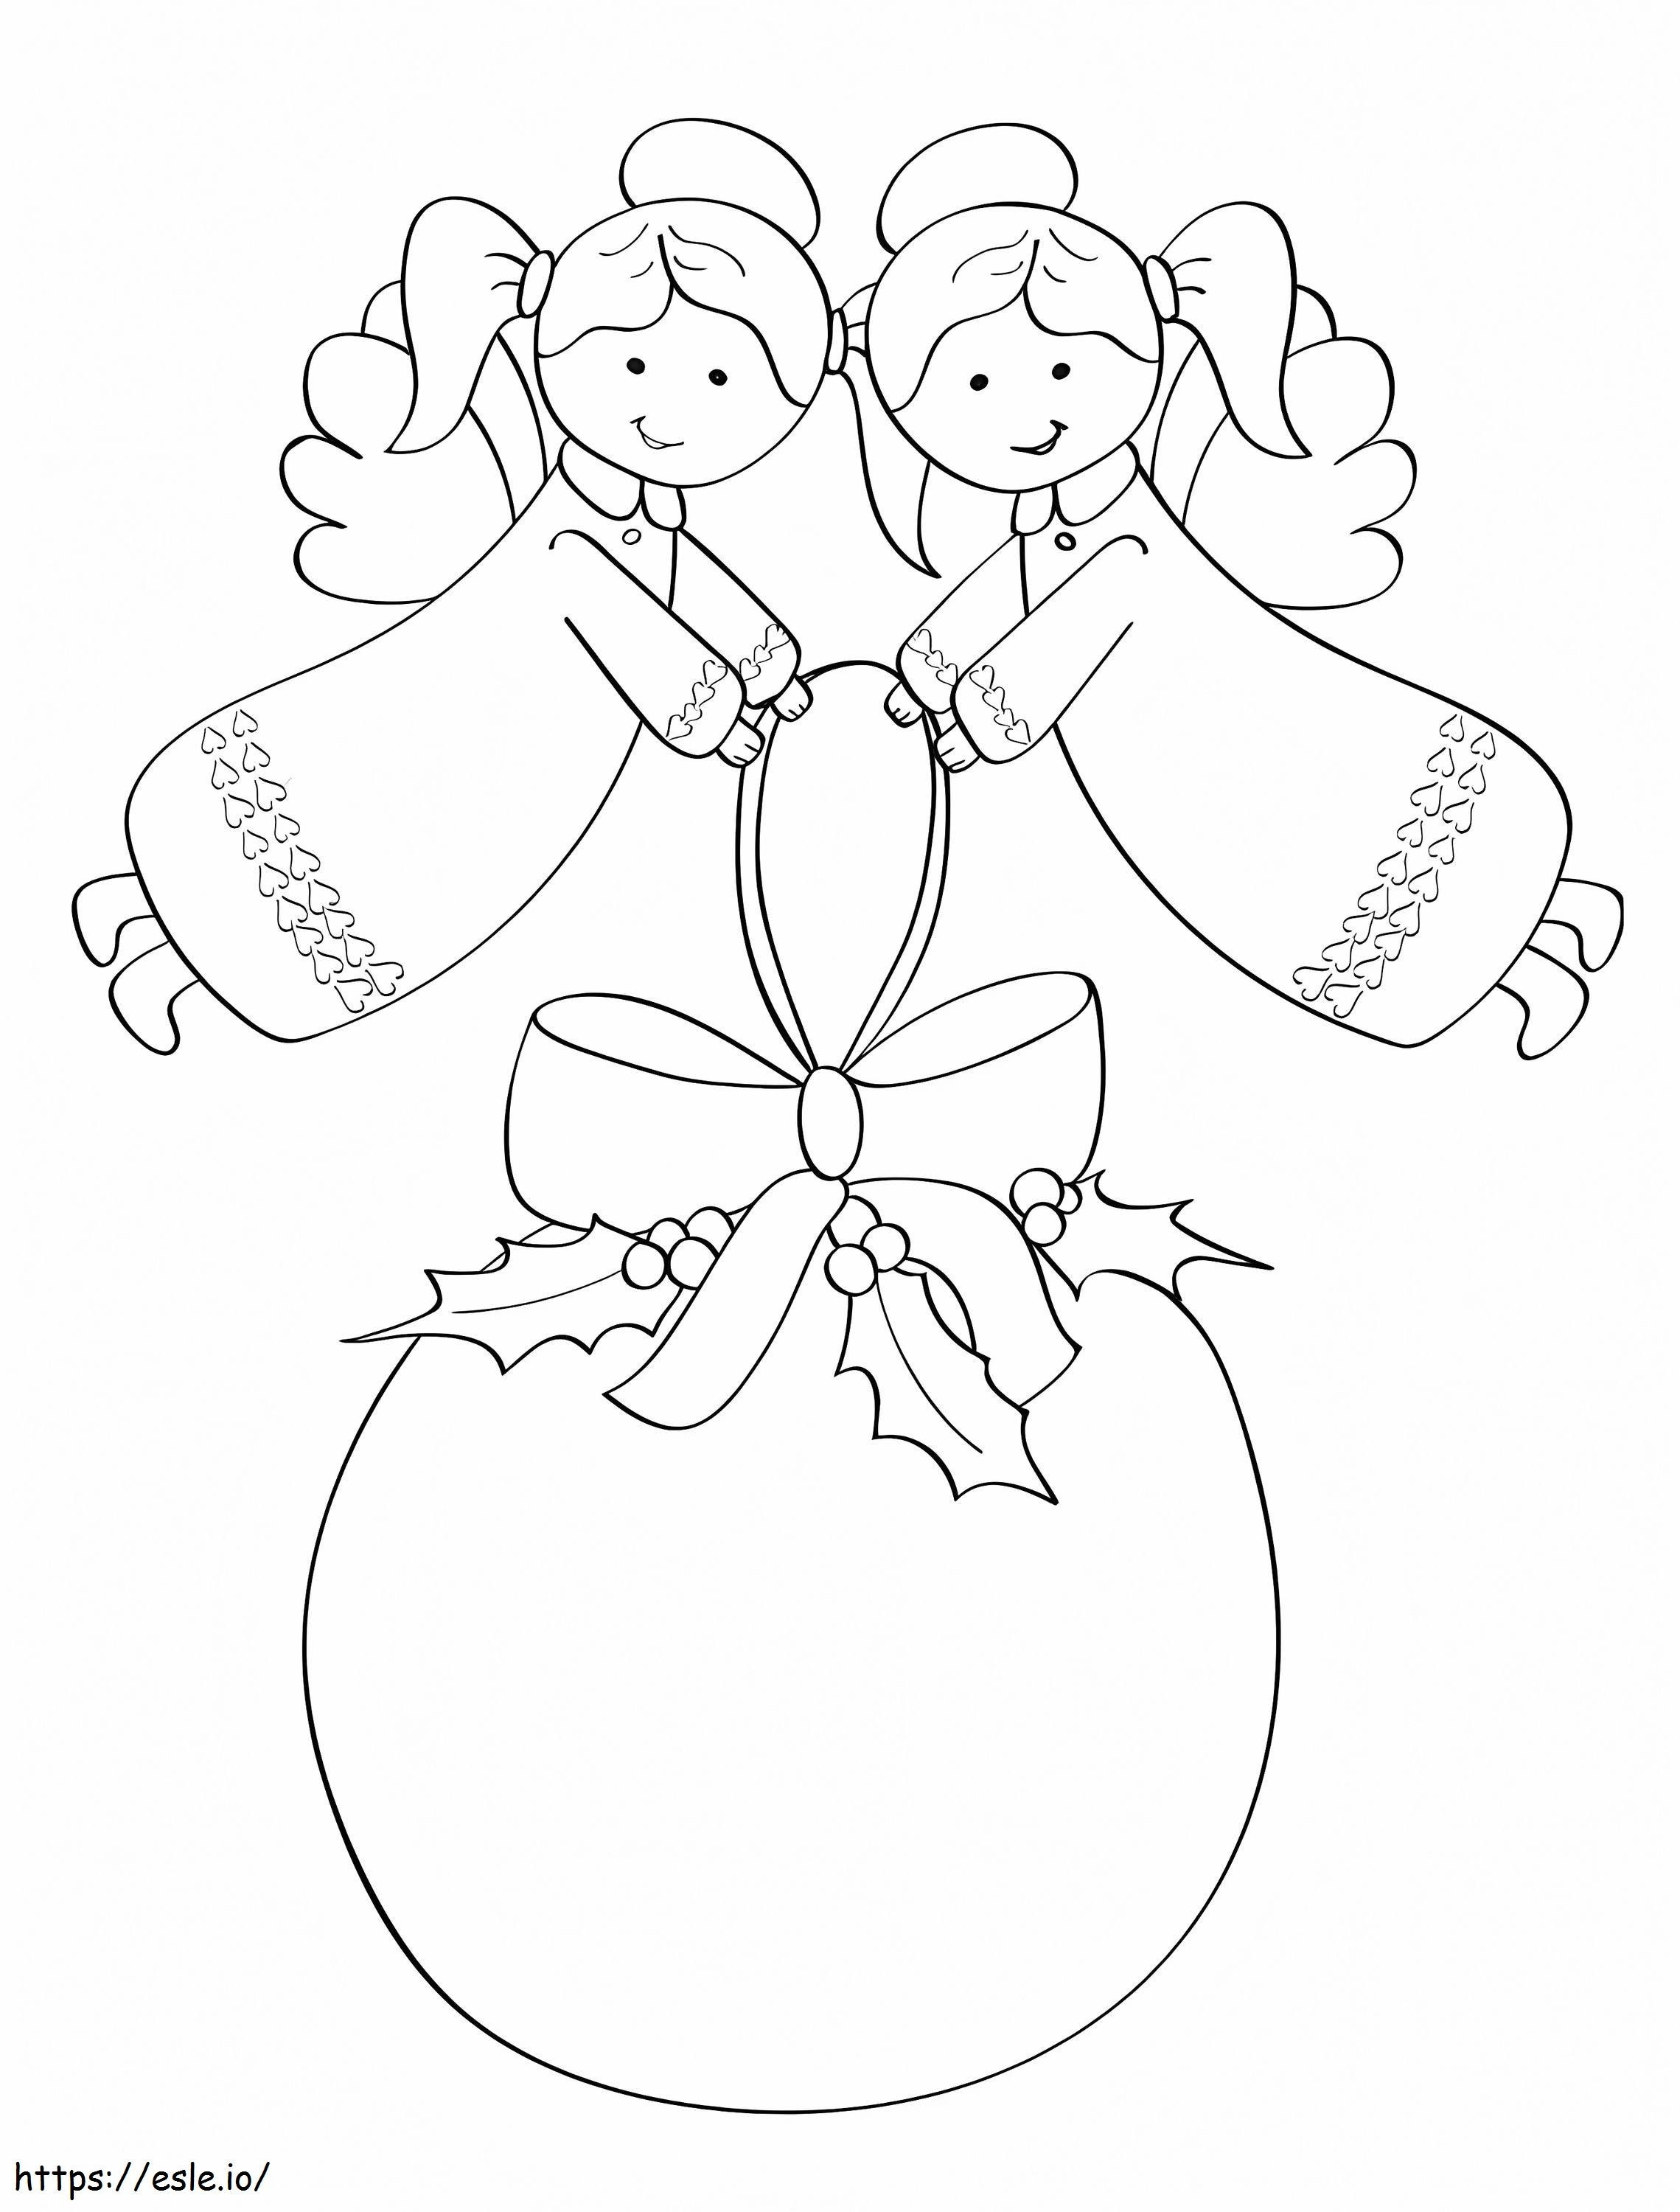 Angel Lifting A Christmas Ball coloring page